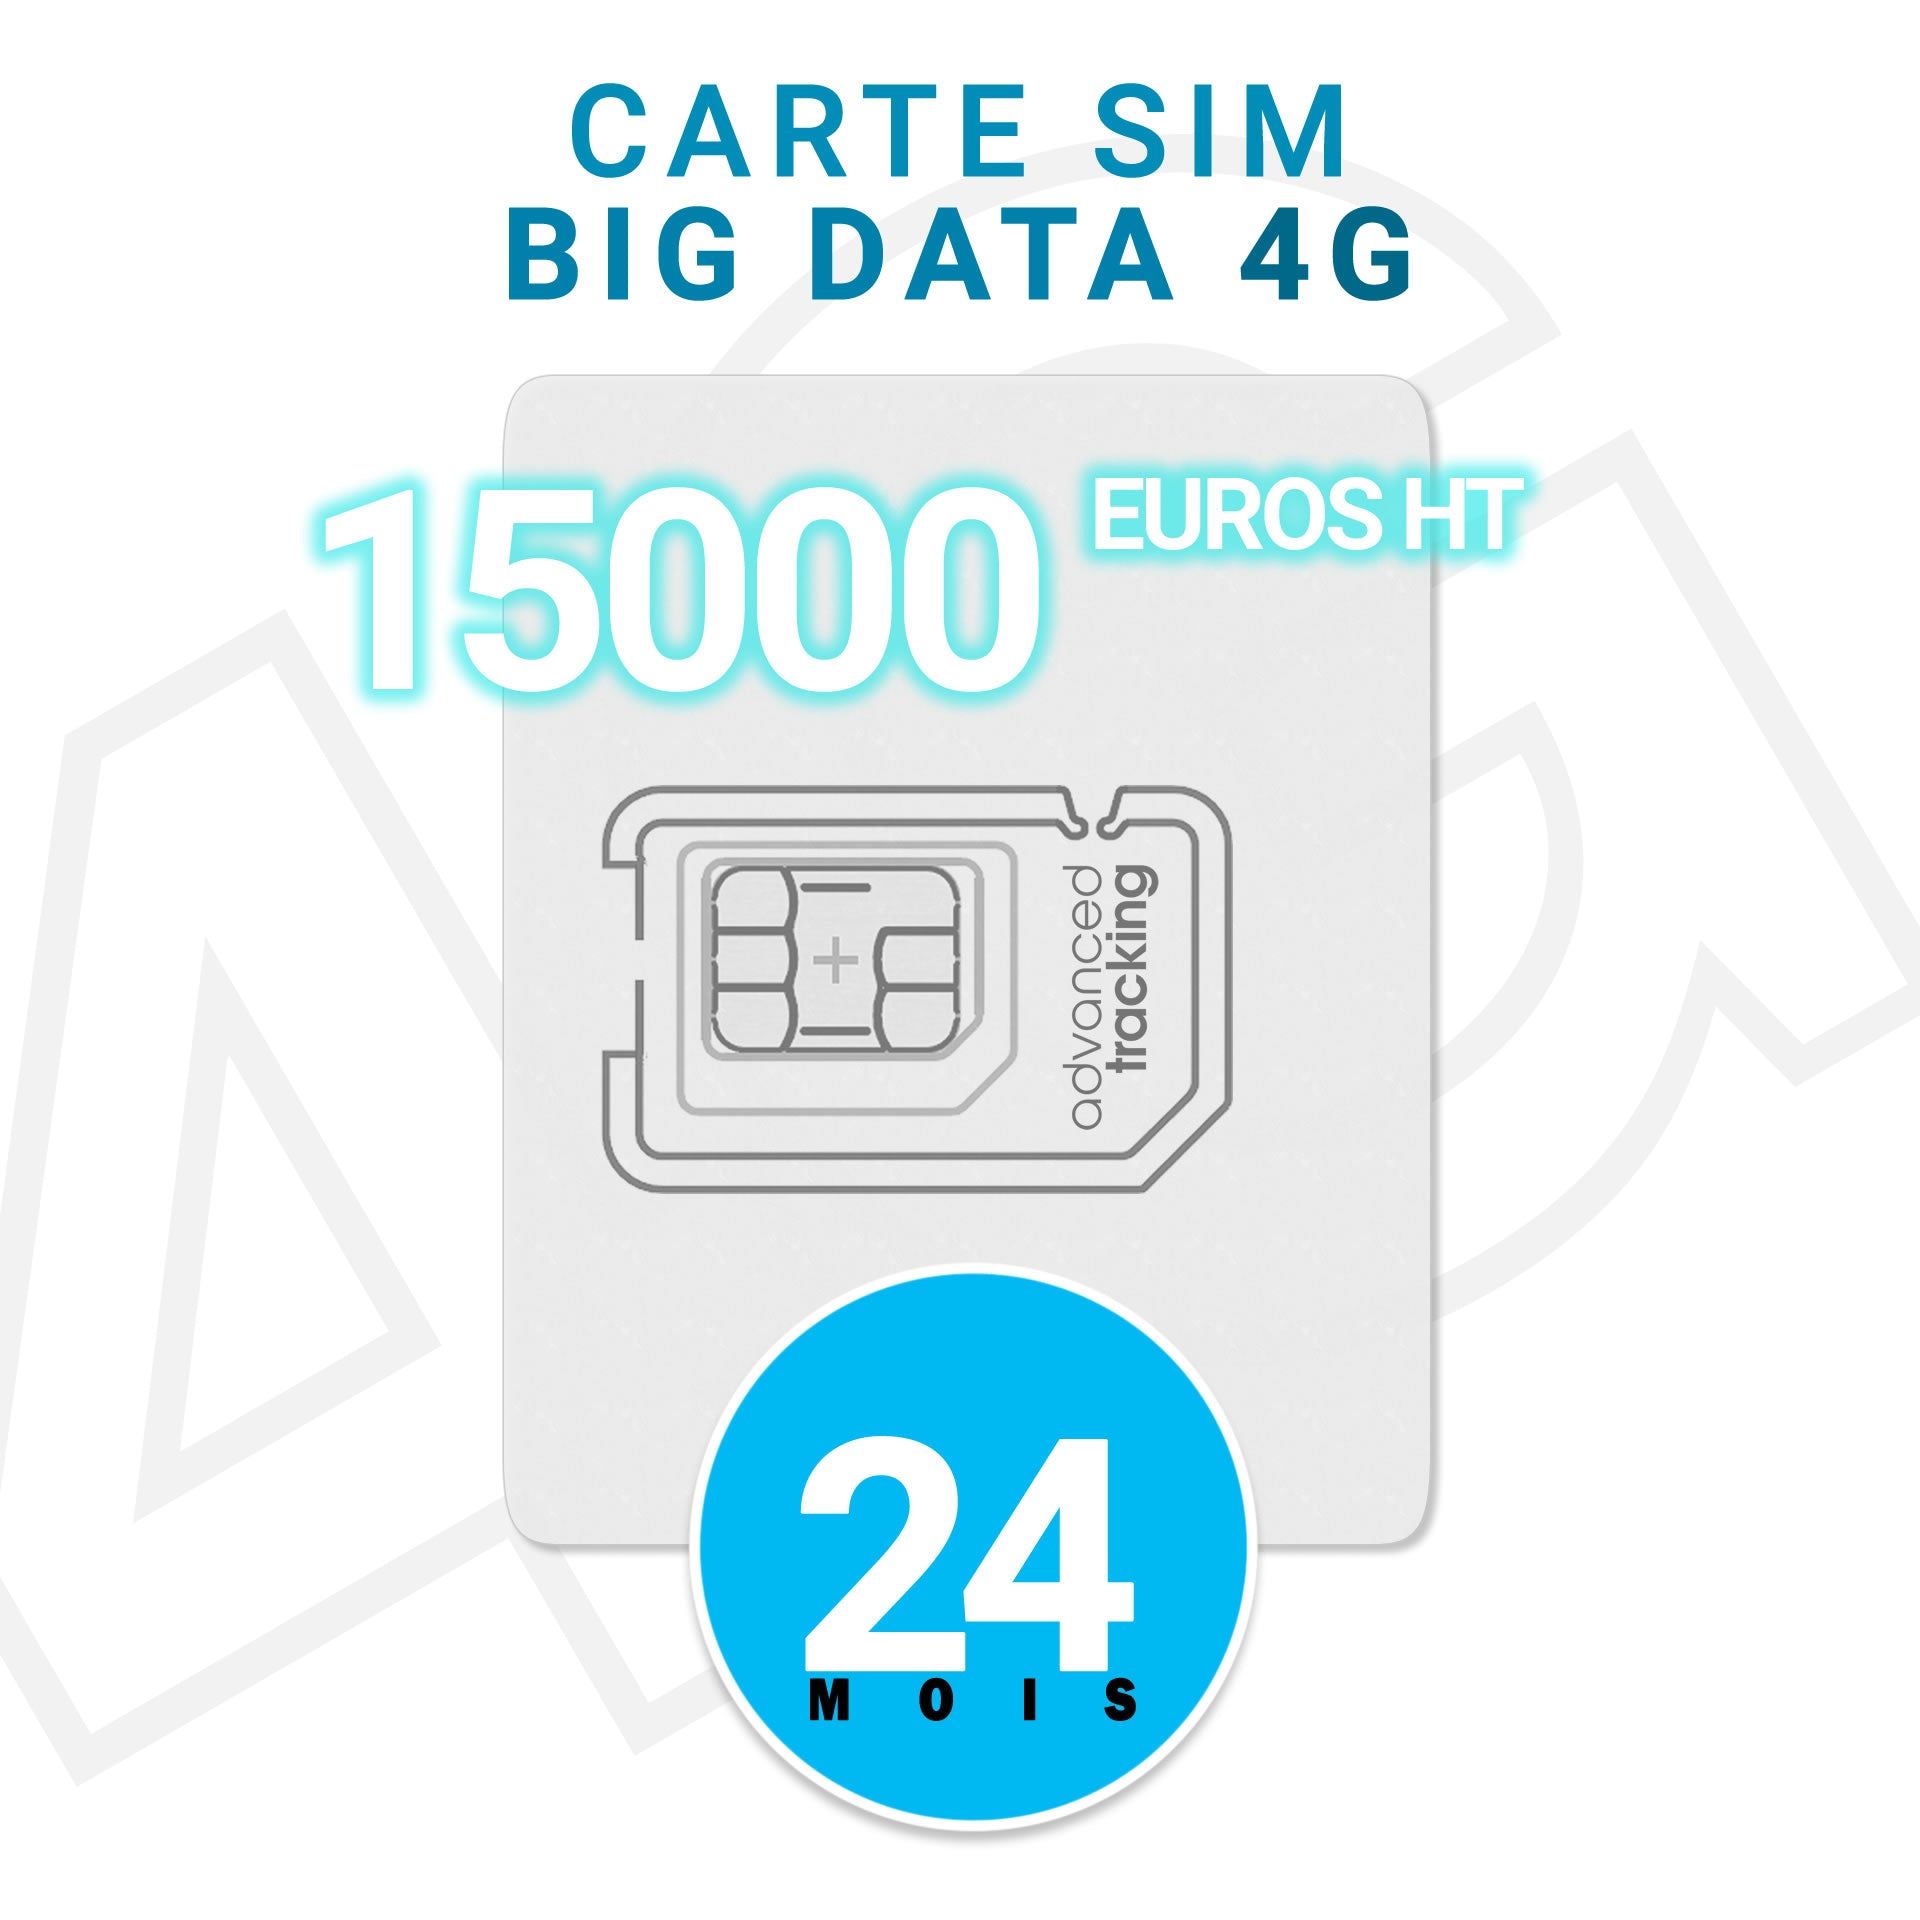 BIG DATA prepaid SIM card 15.000 € HT - VALIDITY 24 MONTHS